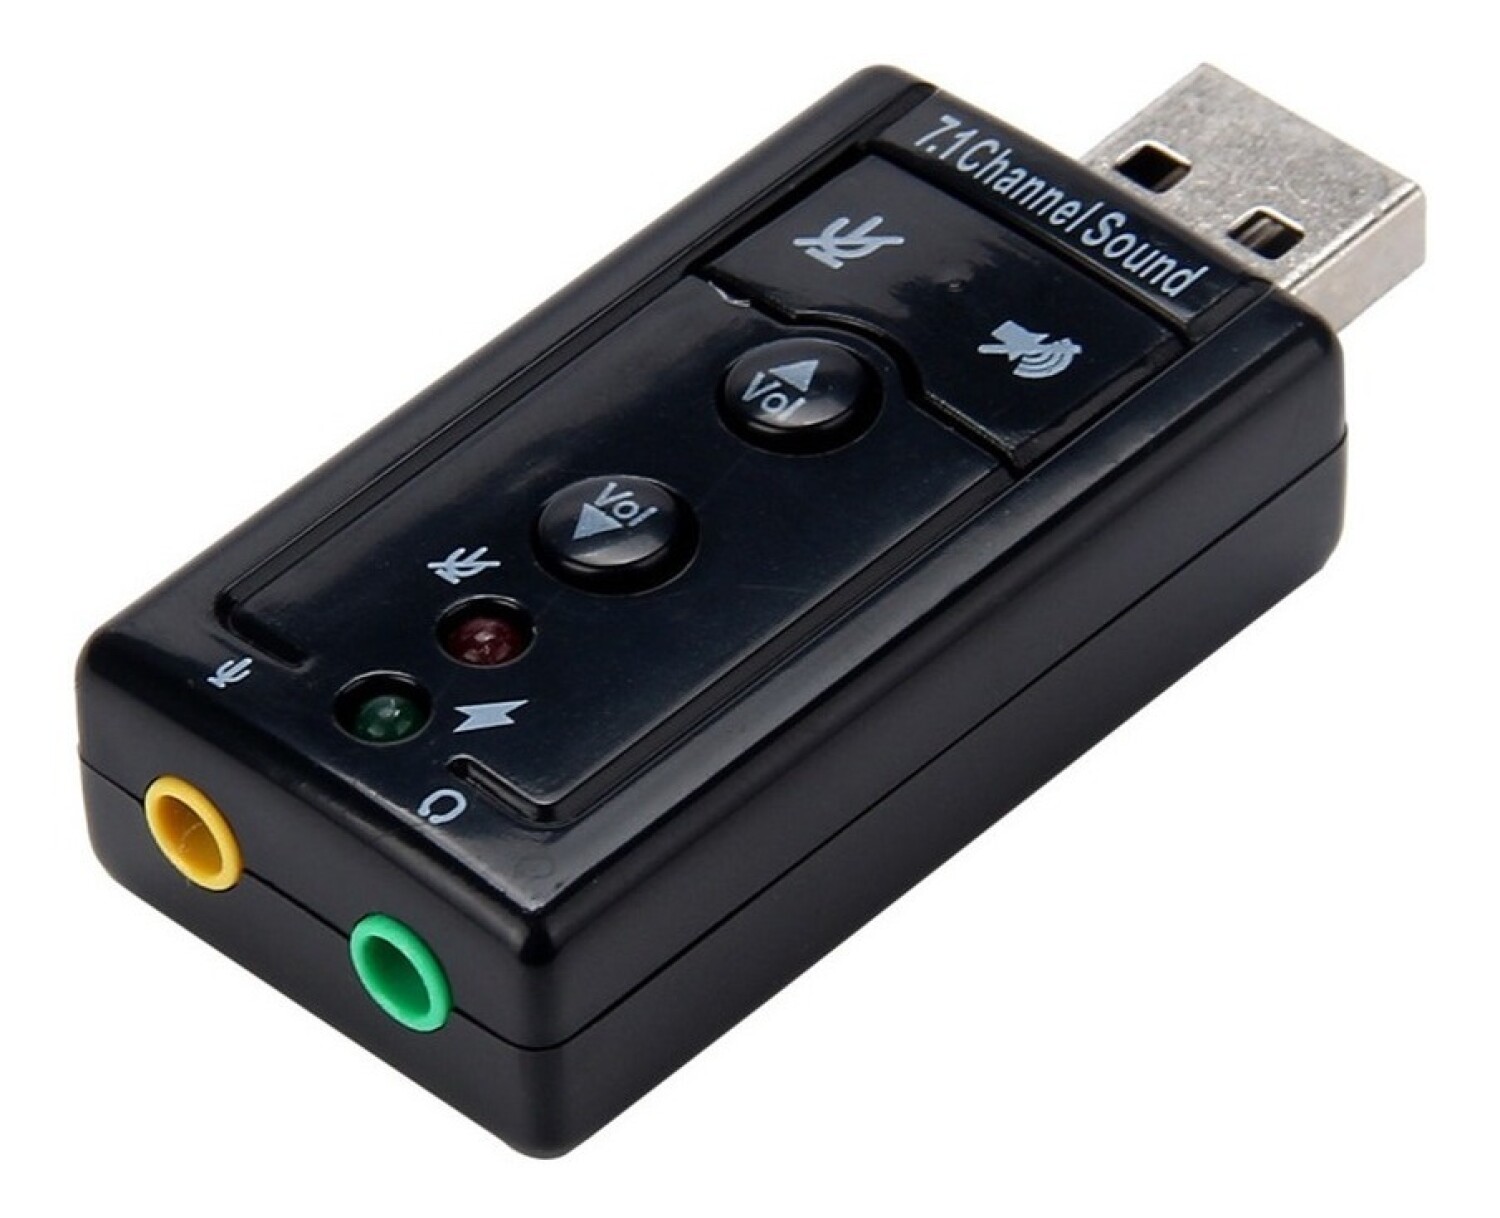 Tarjeta de Sonido Externa USB 7.1 Compatible con Mac